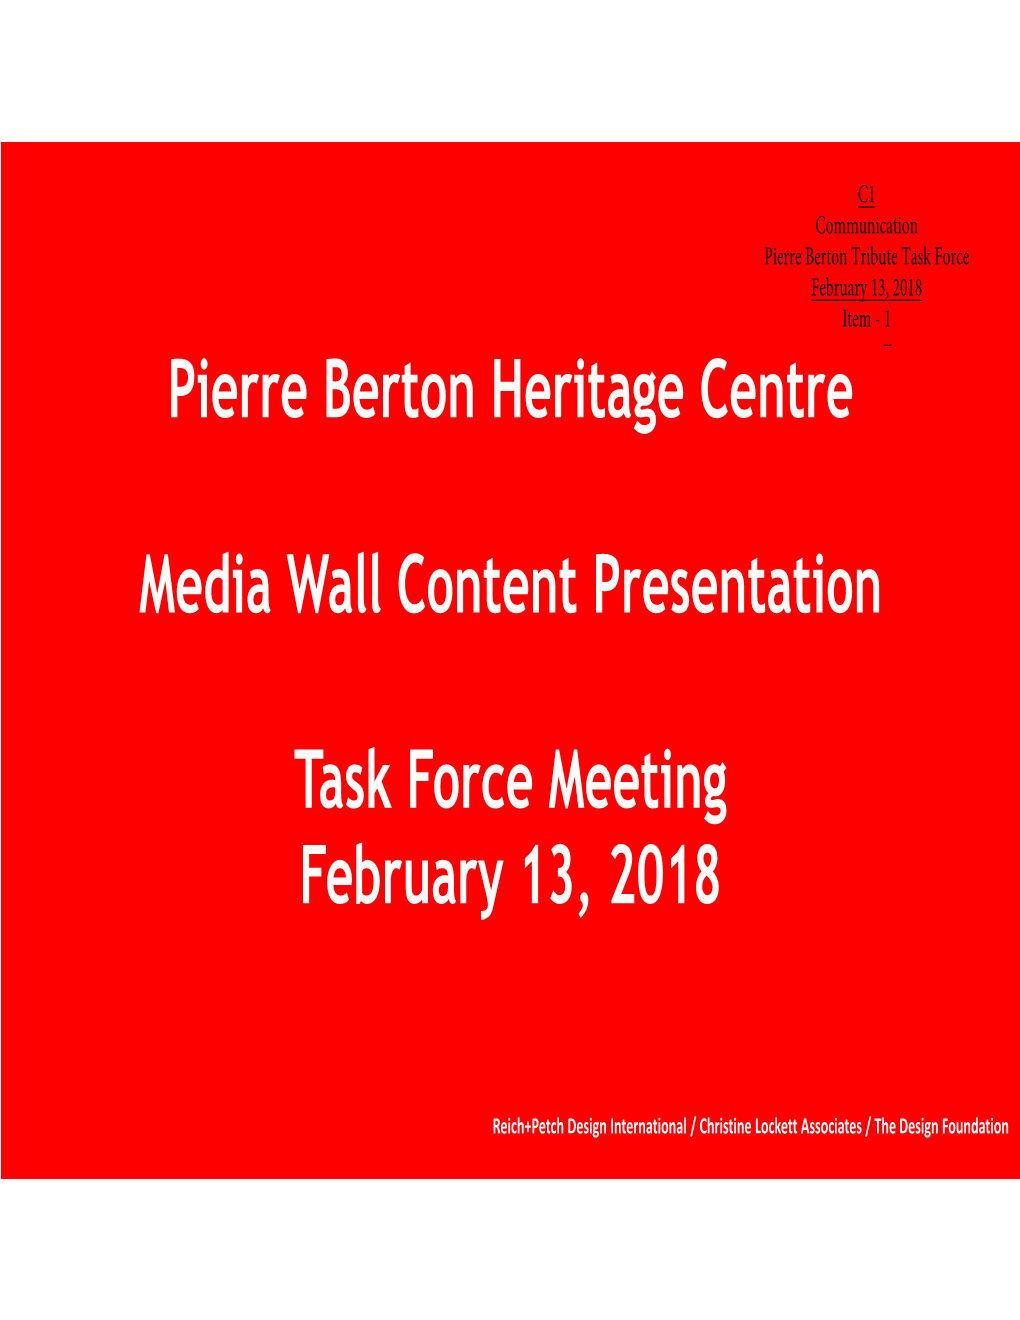 Pierre Berton Heritage Centre Media Wall Content Presentation Task